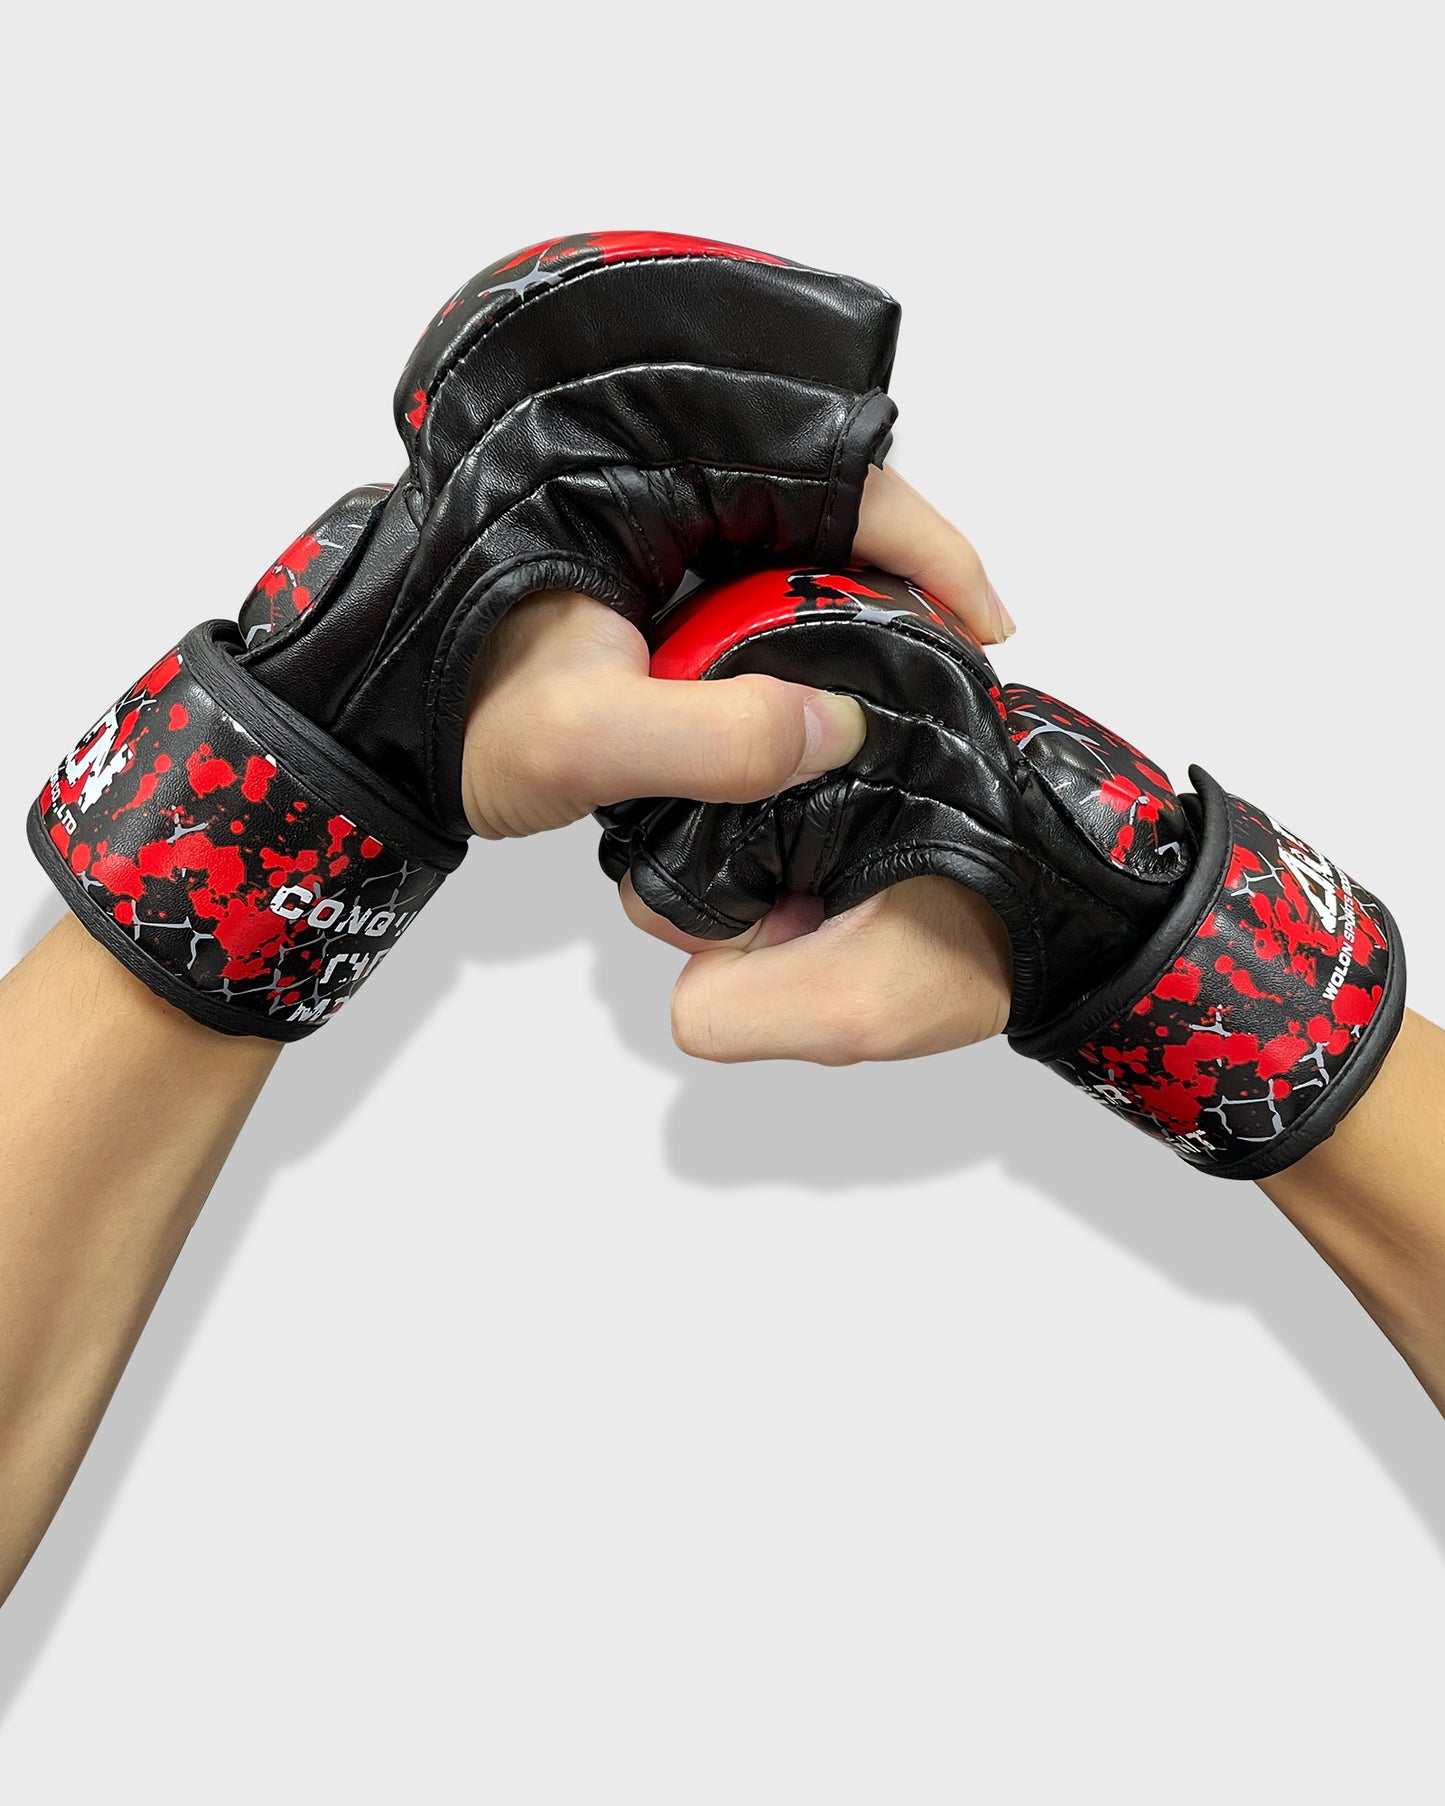 TEKXYZ MMA Gloves - Open Palm